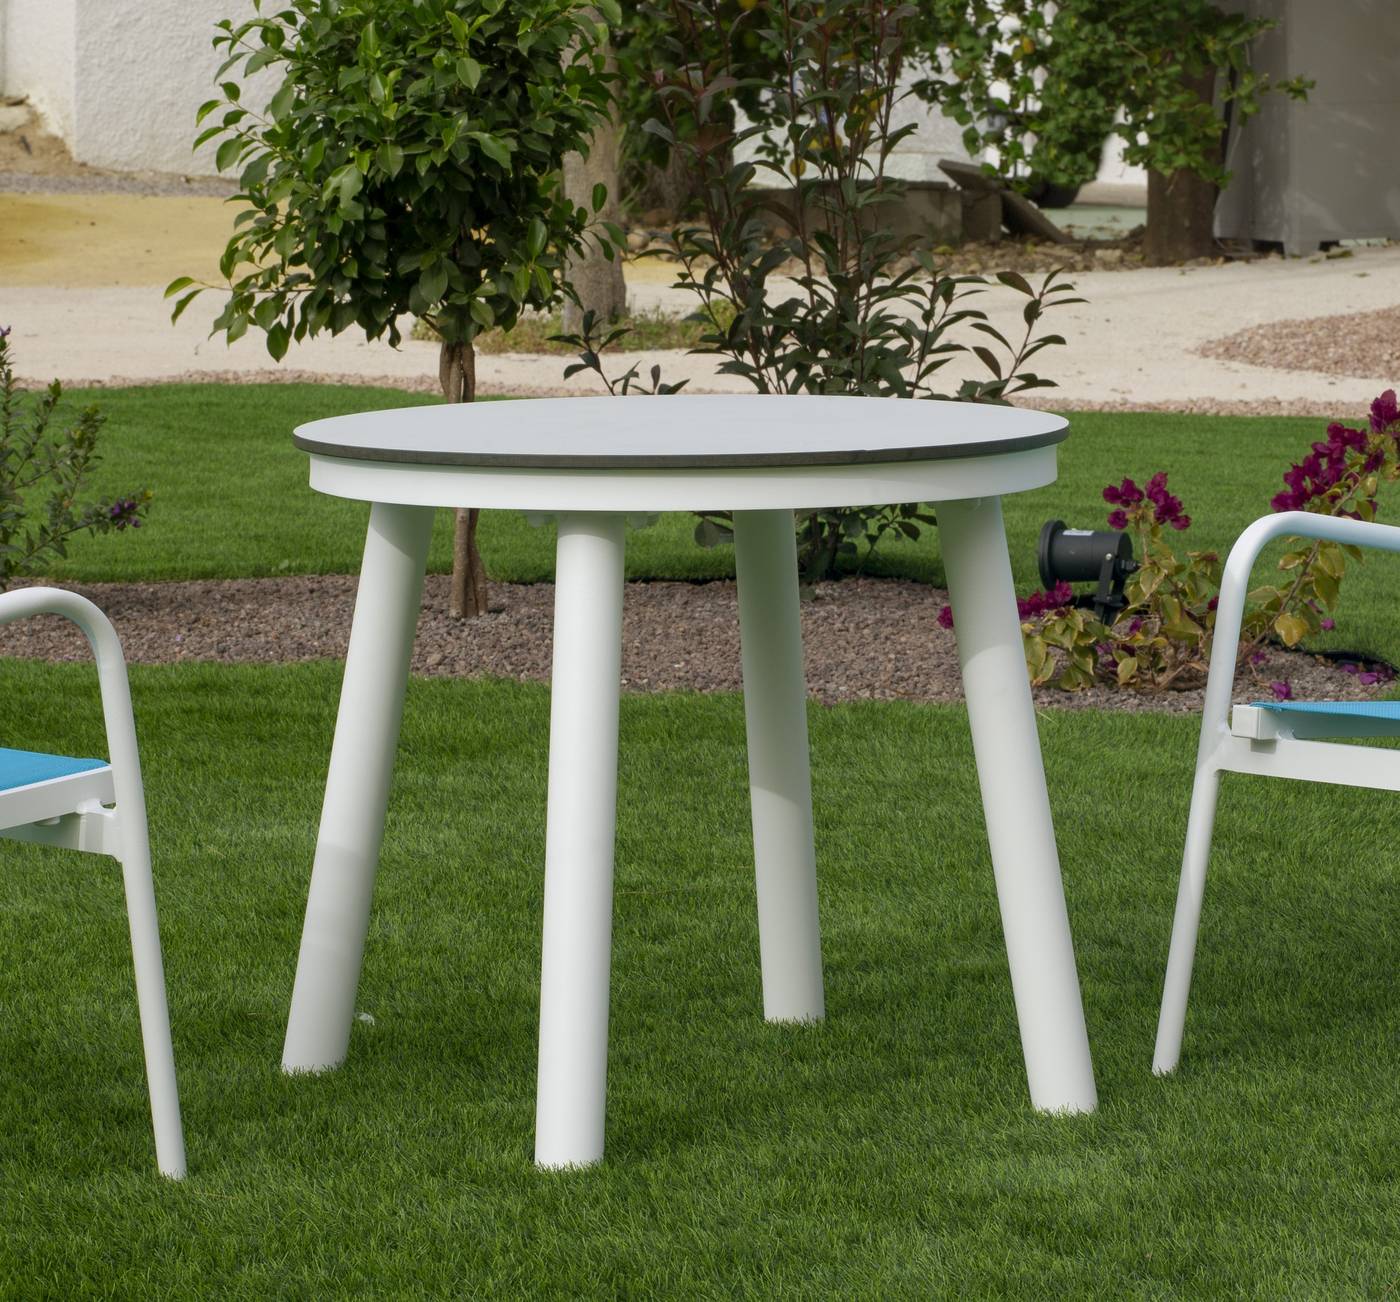 Conjunto Disni Alumino - Conjunto infantil de aluminio para jardín: mesa redonda con tablero HPL de 60 cm + 2 sillones de textilen.